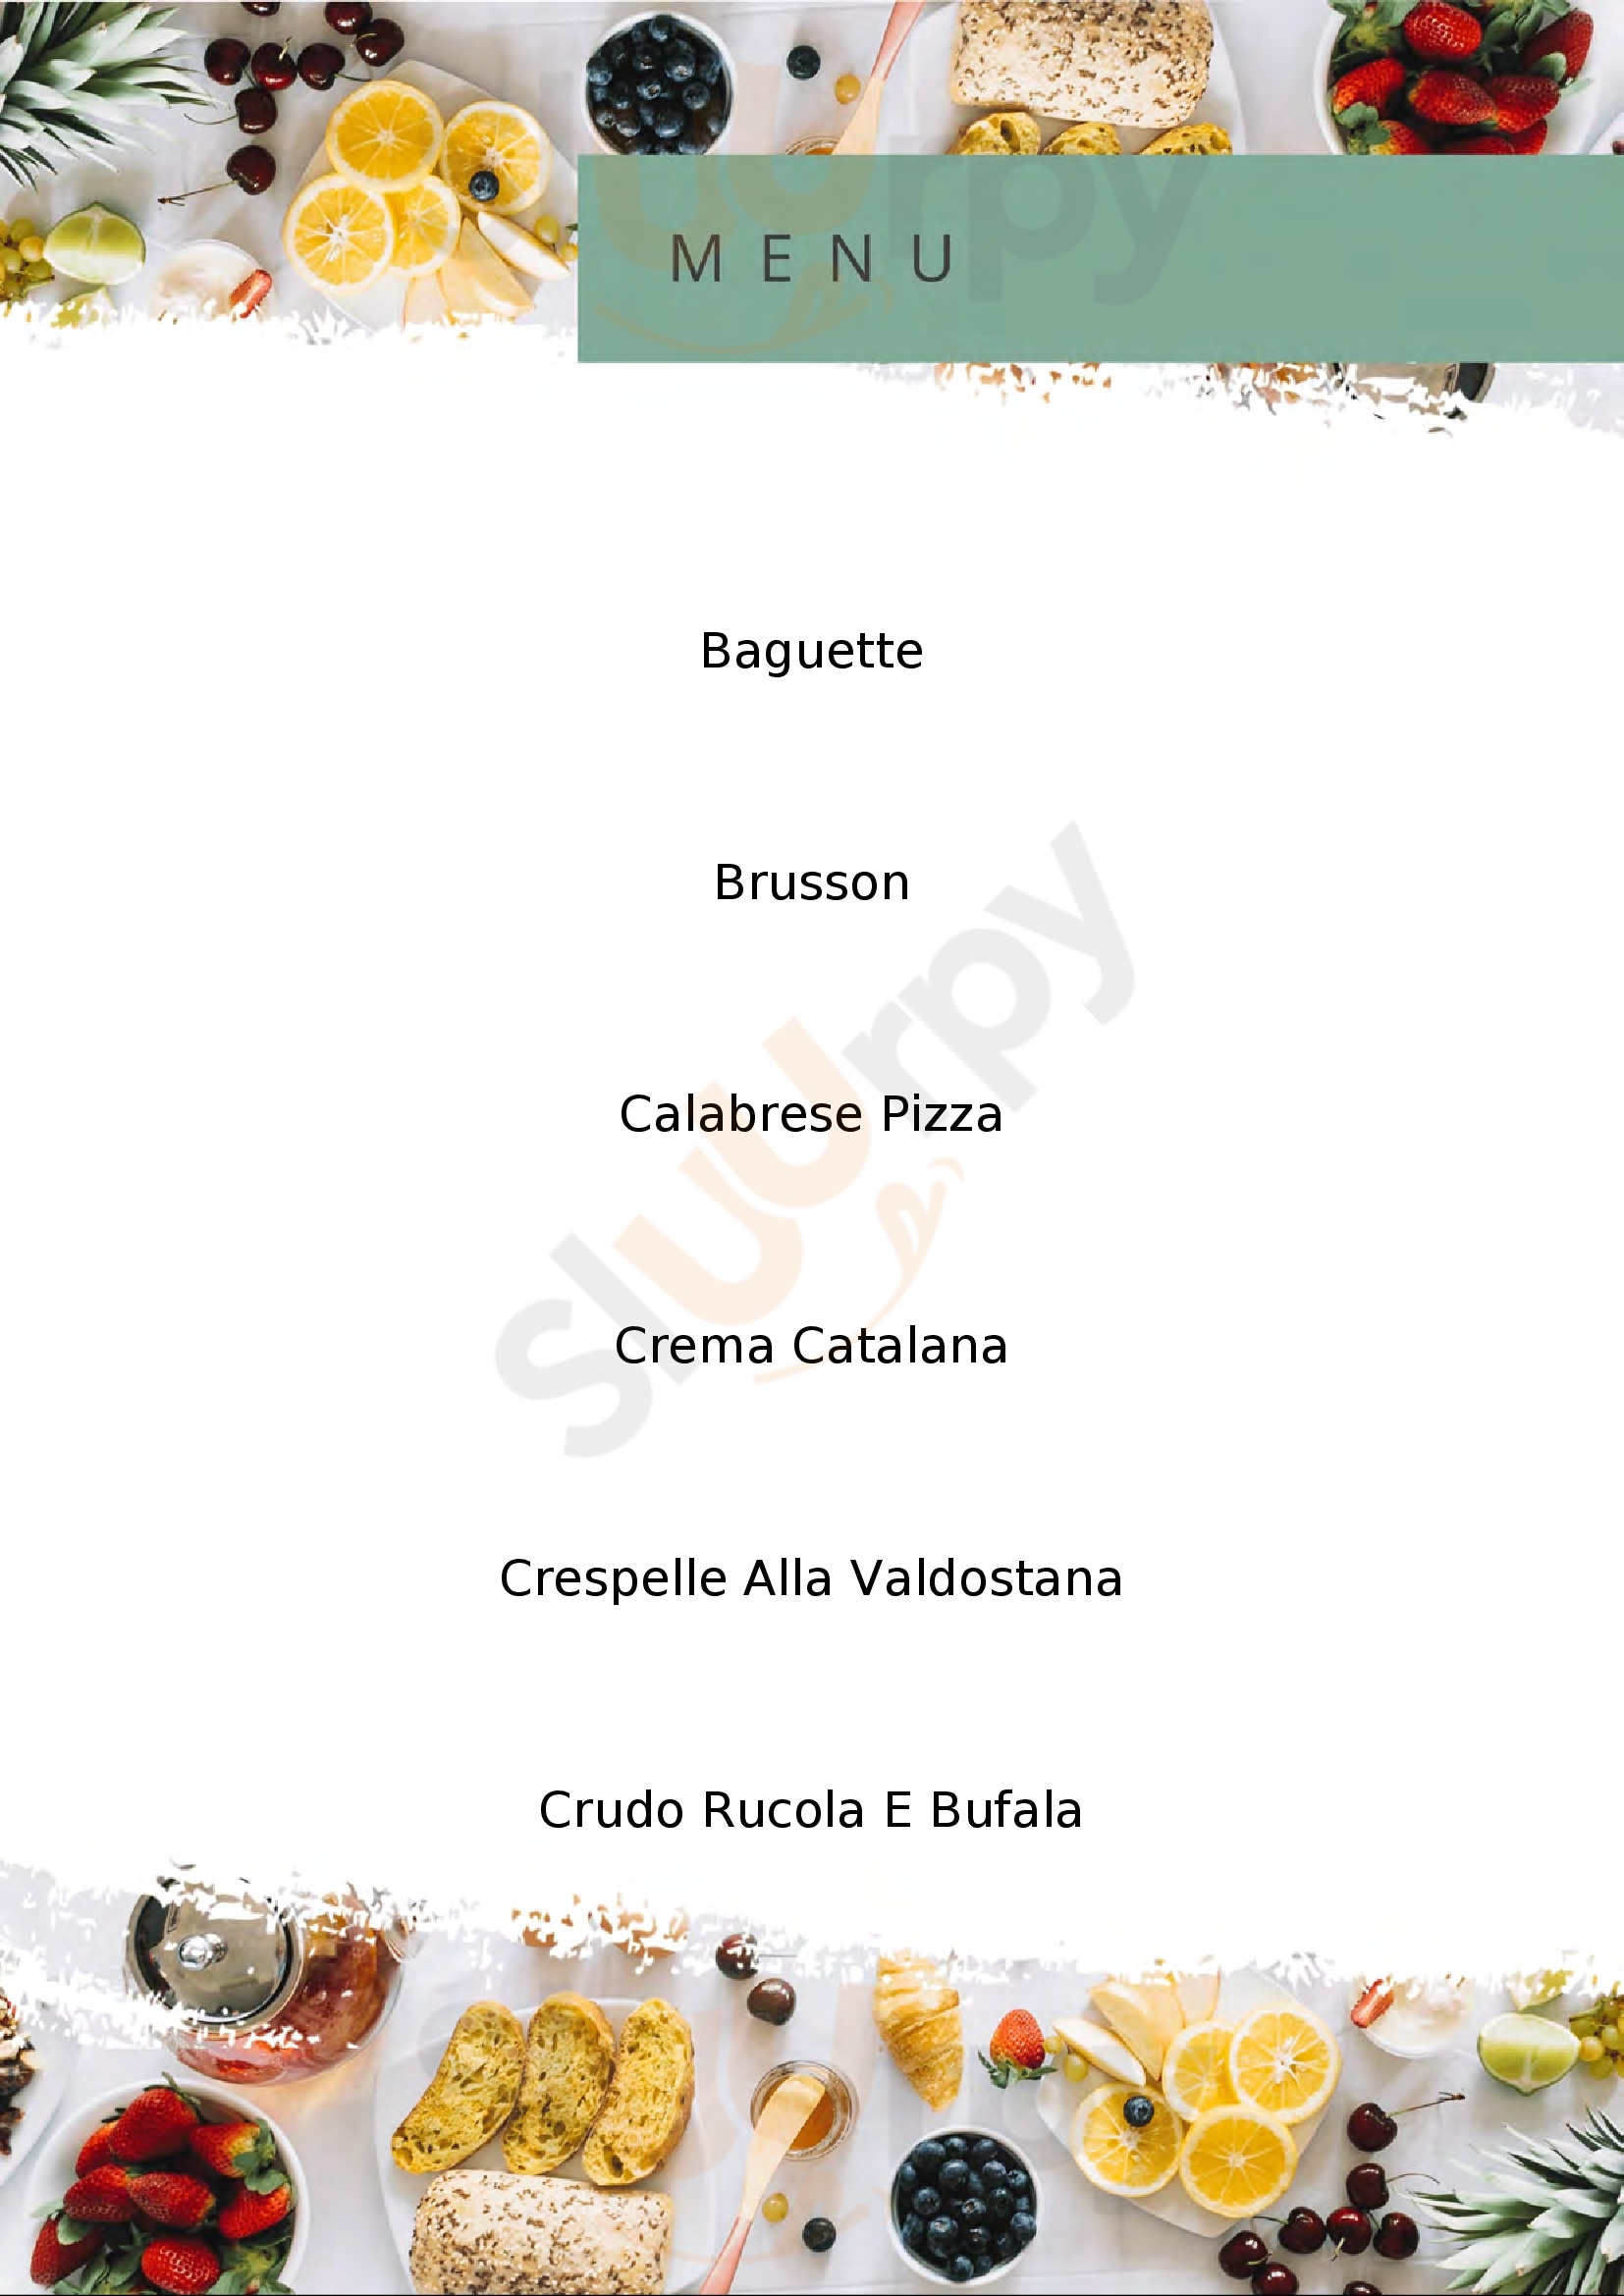 Ristorante Pizzeria La Baguette Brusson menù 1 pagina